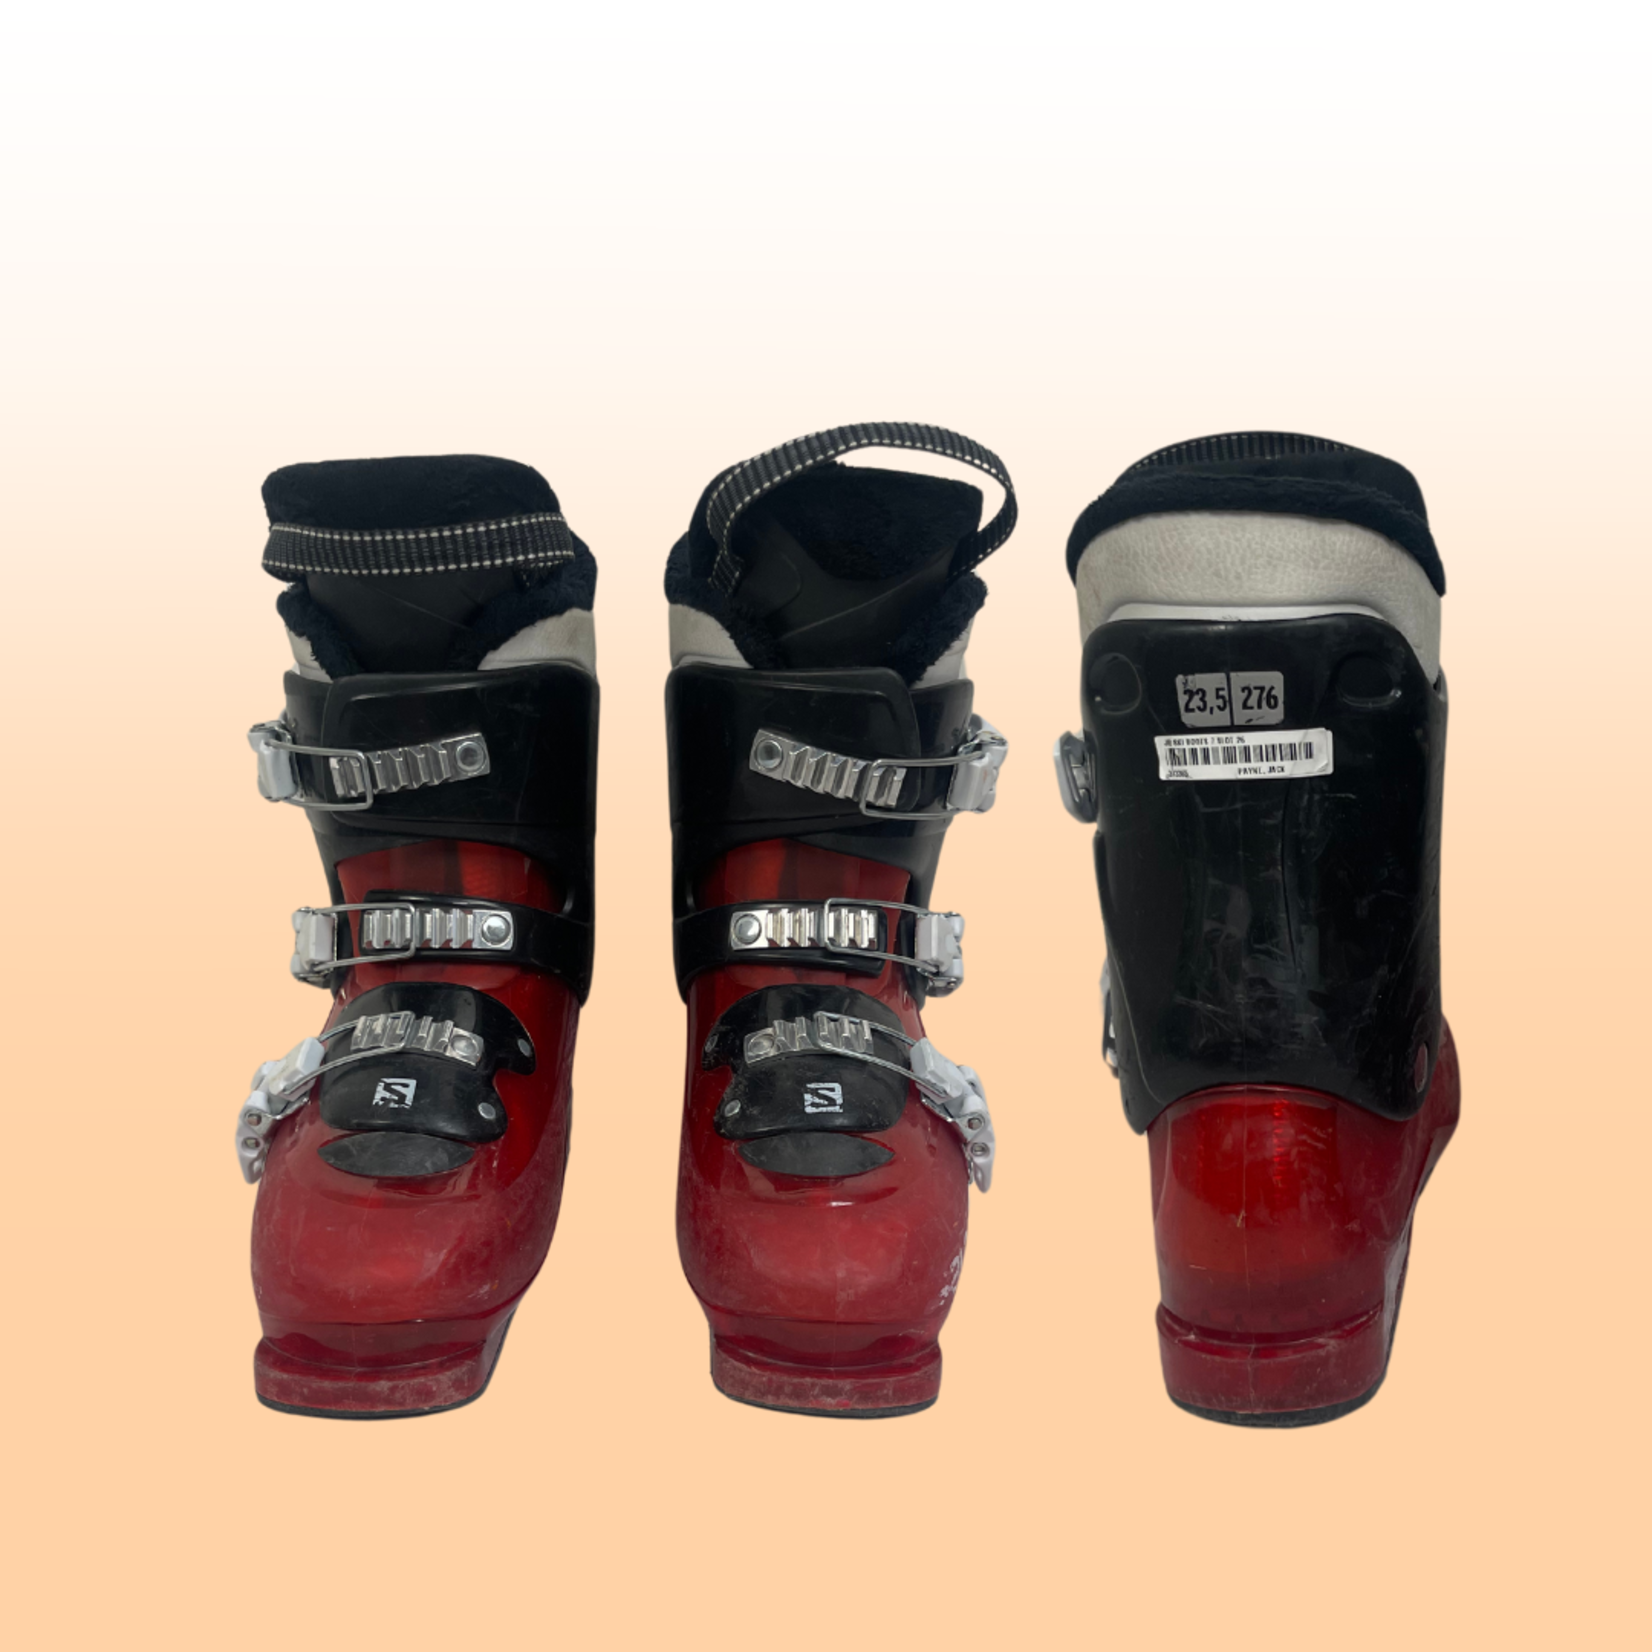 Salomon Salomon T3 Kids Ski Boots, Size 23.5